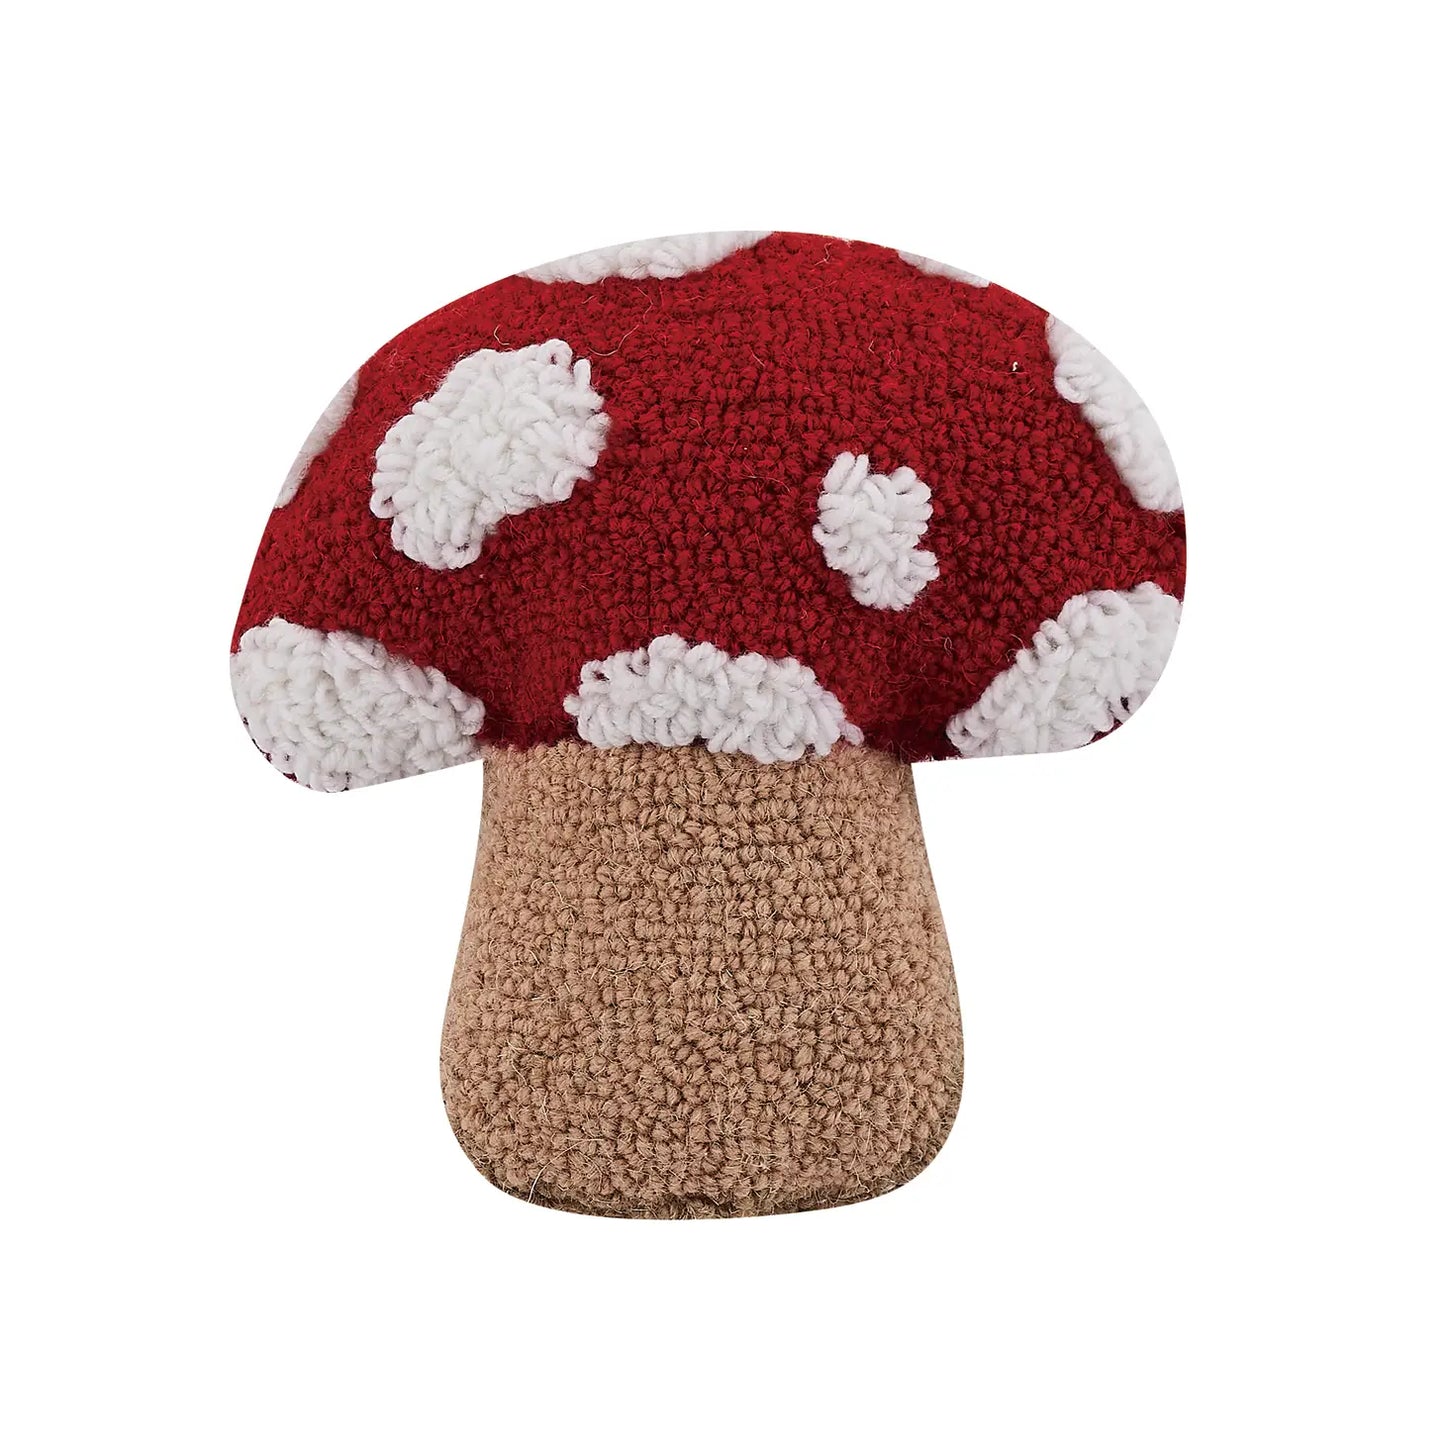 Cute Mushroom Cushion